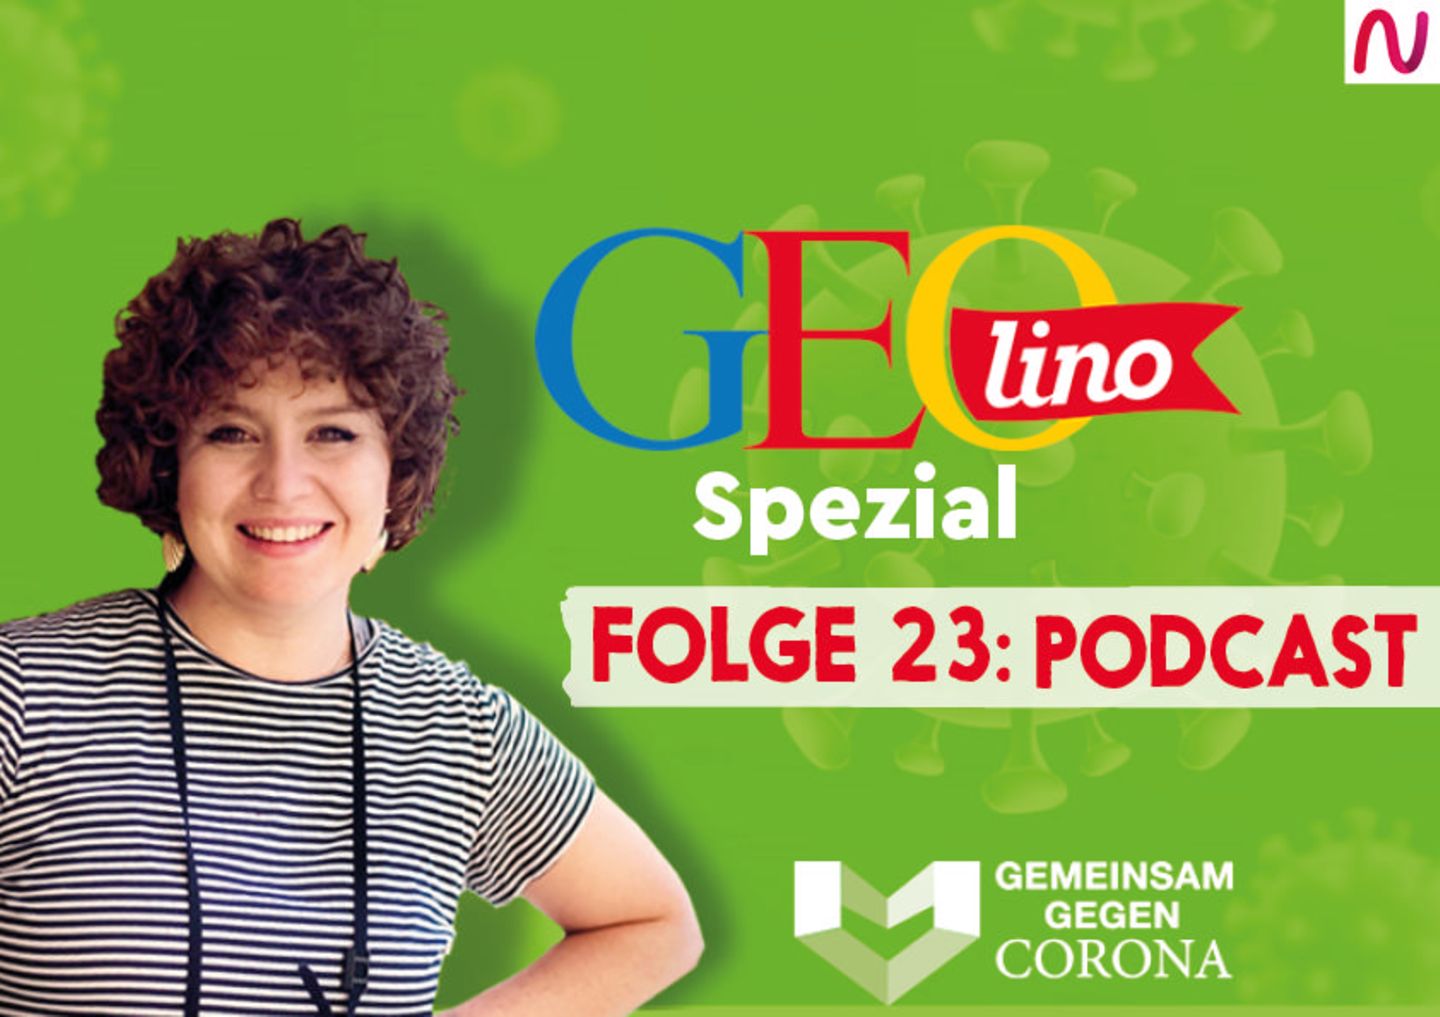 GEOlino-Podcast Folge 23: Gemeinsam gegen Corona: Podcast